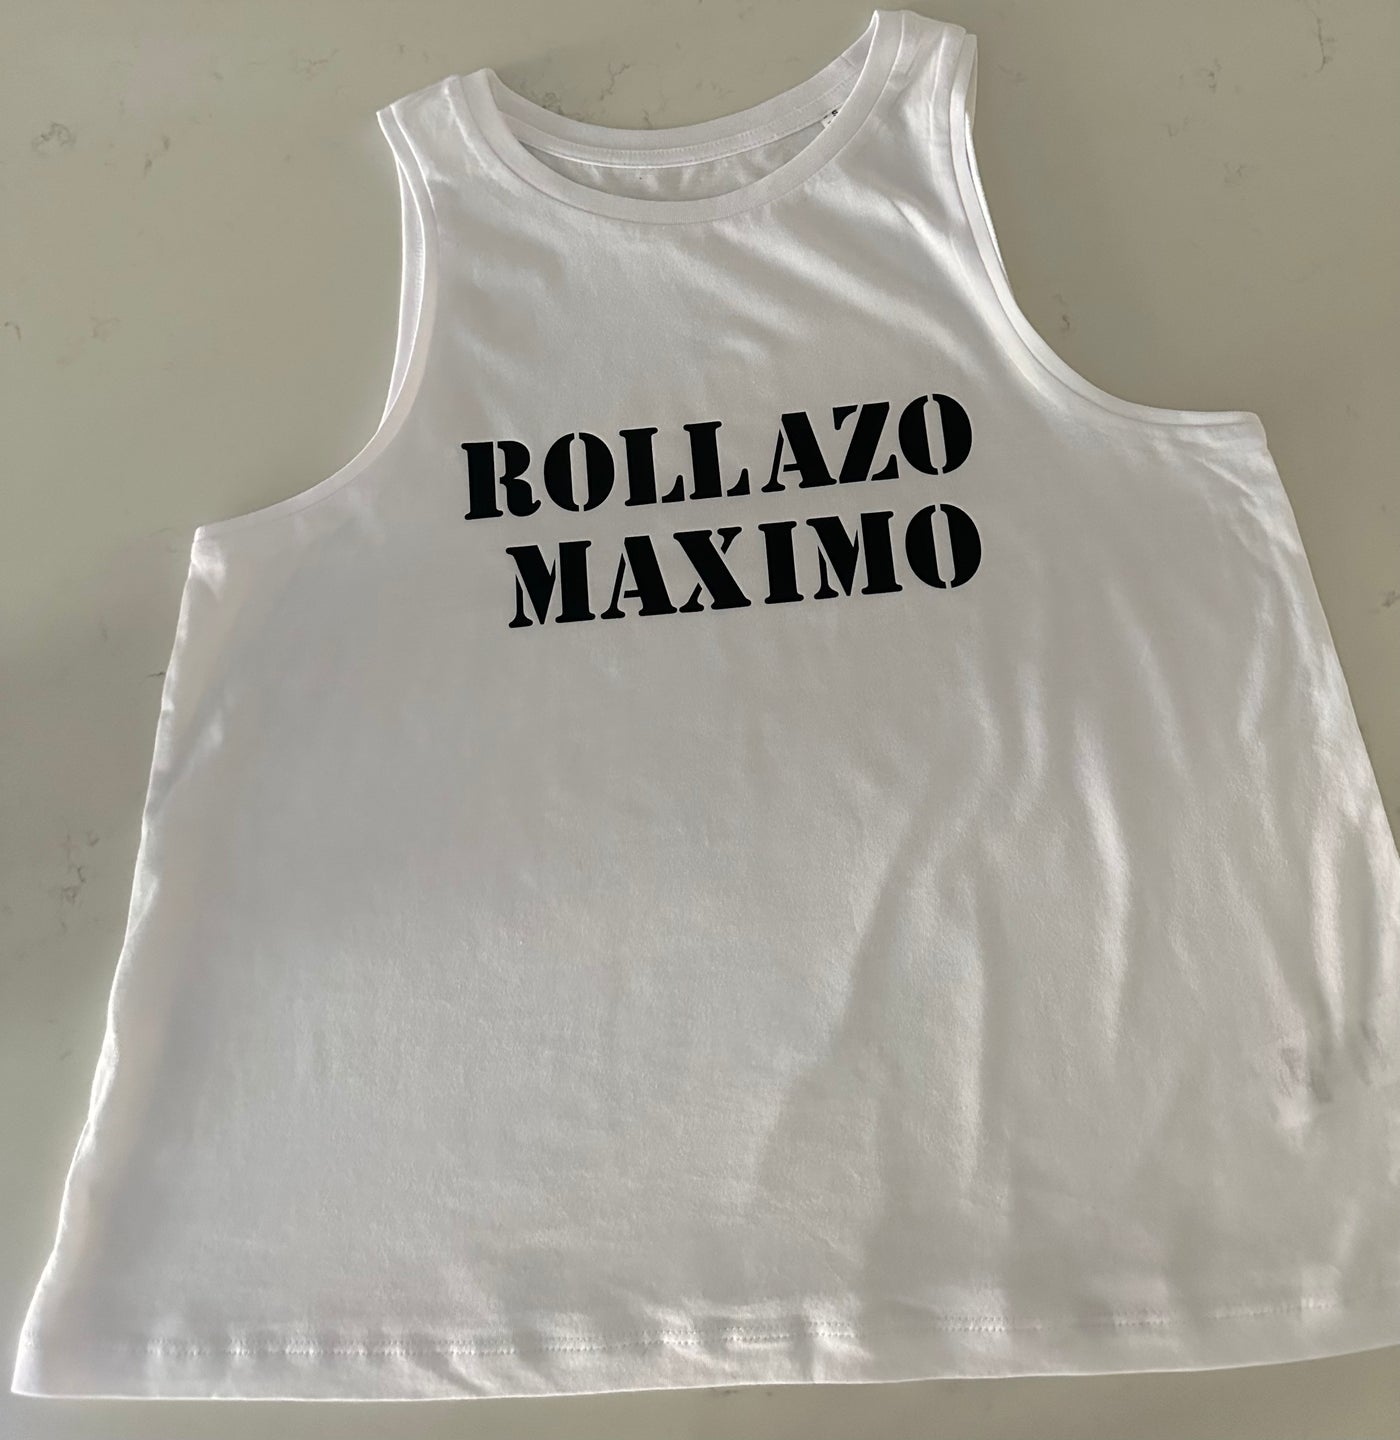 Camiseta “Rollazo máximo”